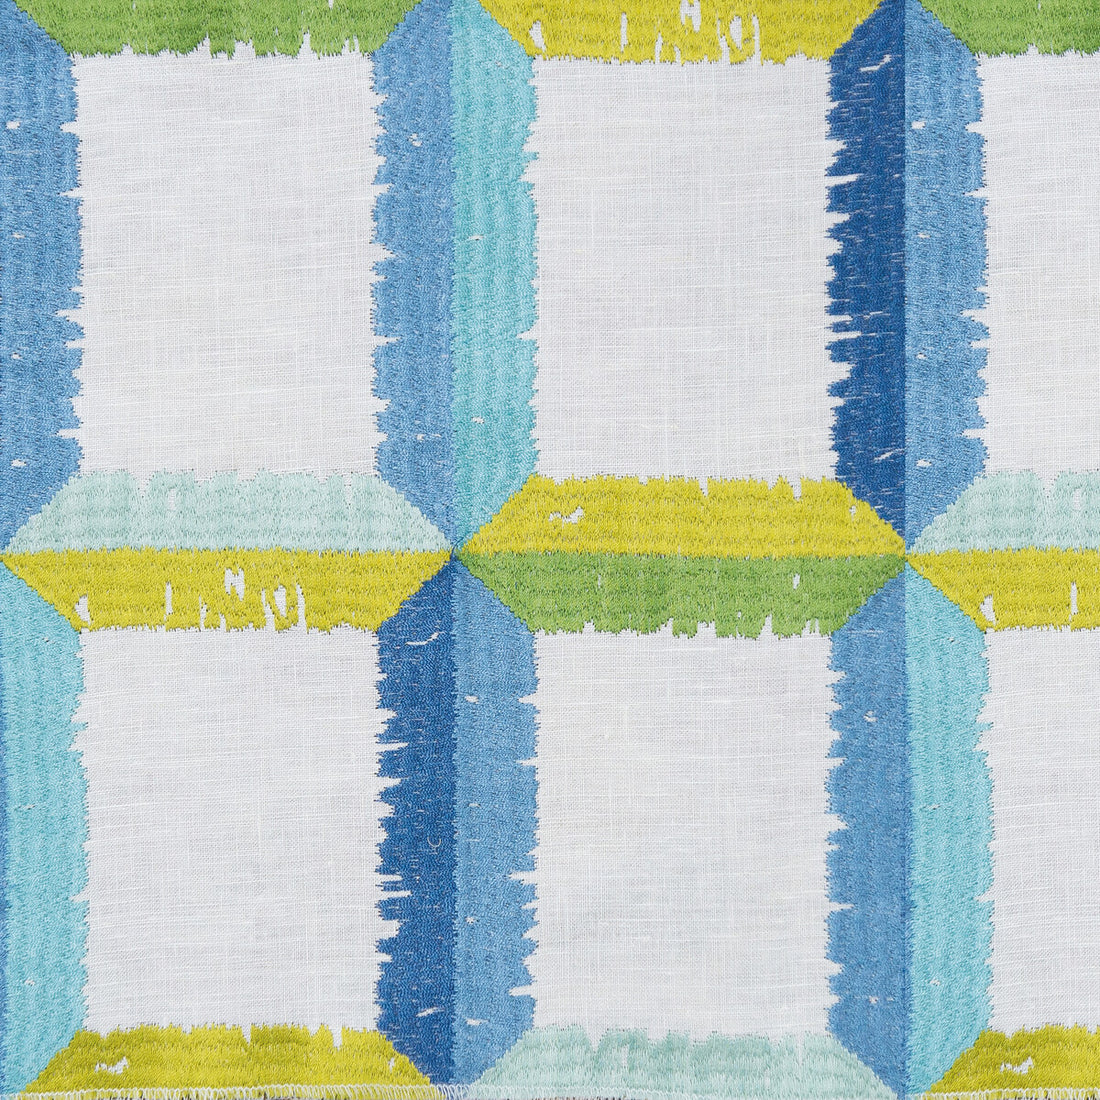 Yucatan fabric in agua/lima color - pattern GDT5563.003.0 - by Gaston y Daniela in the Gaston Nuevo Mundo collection